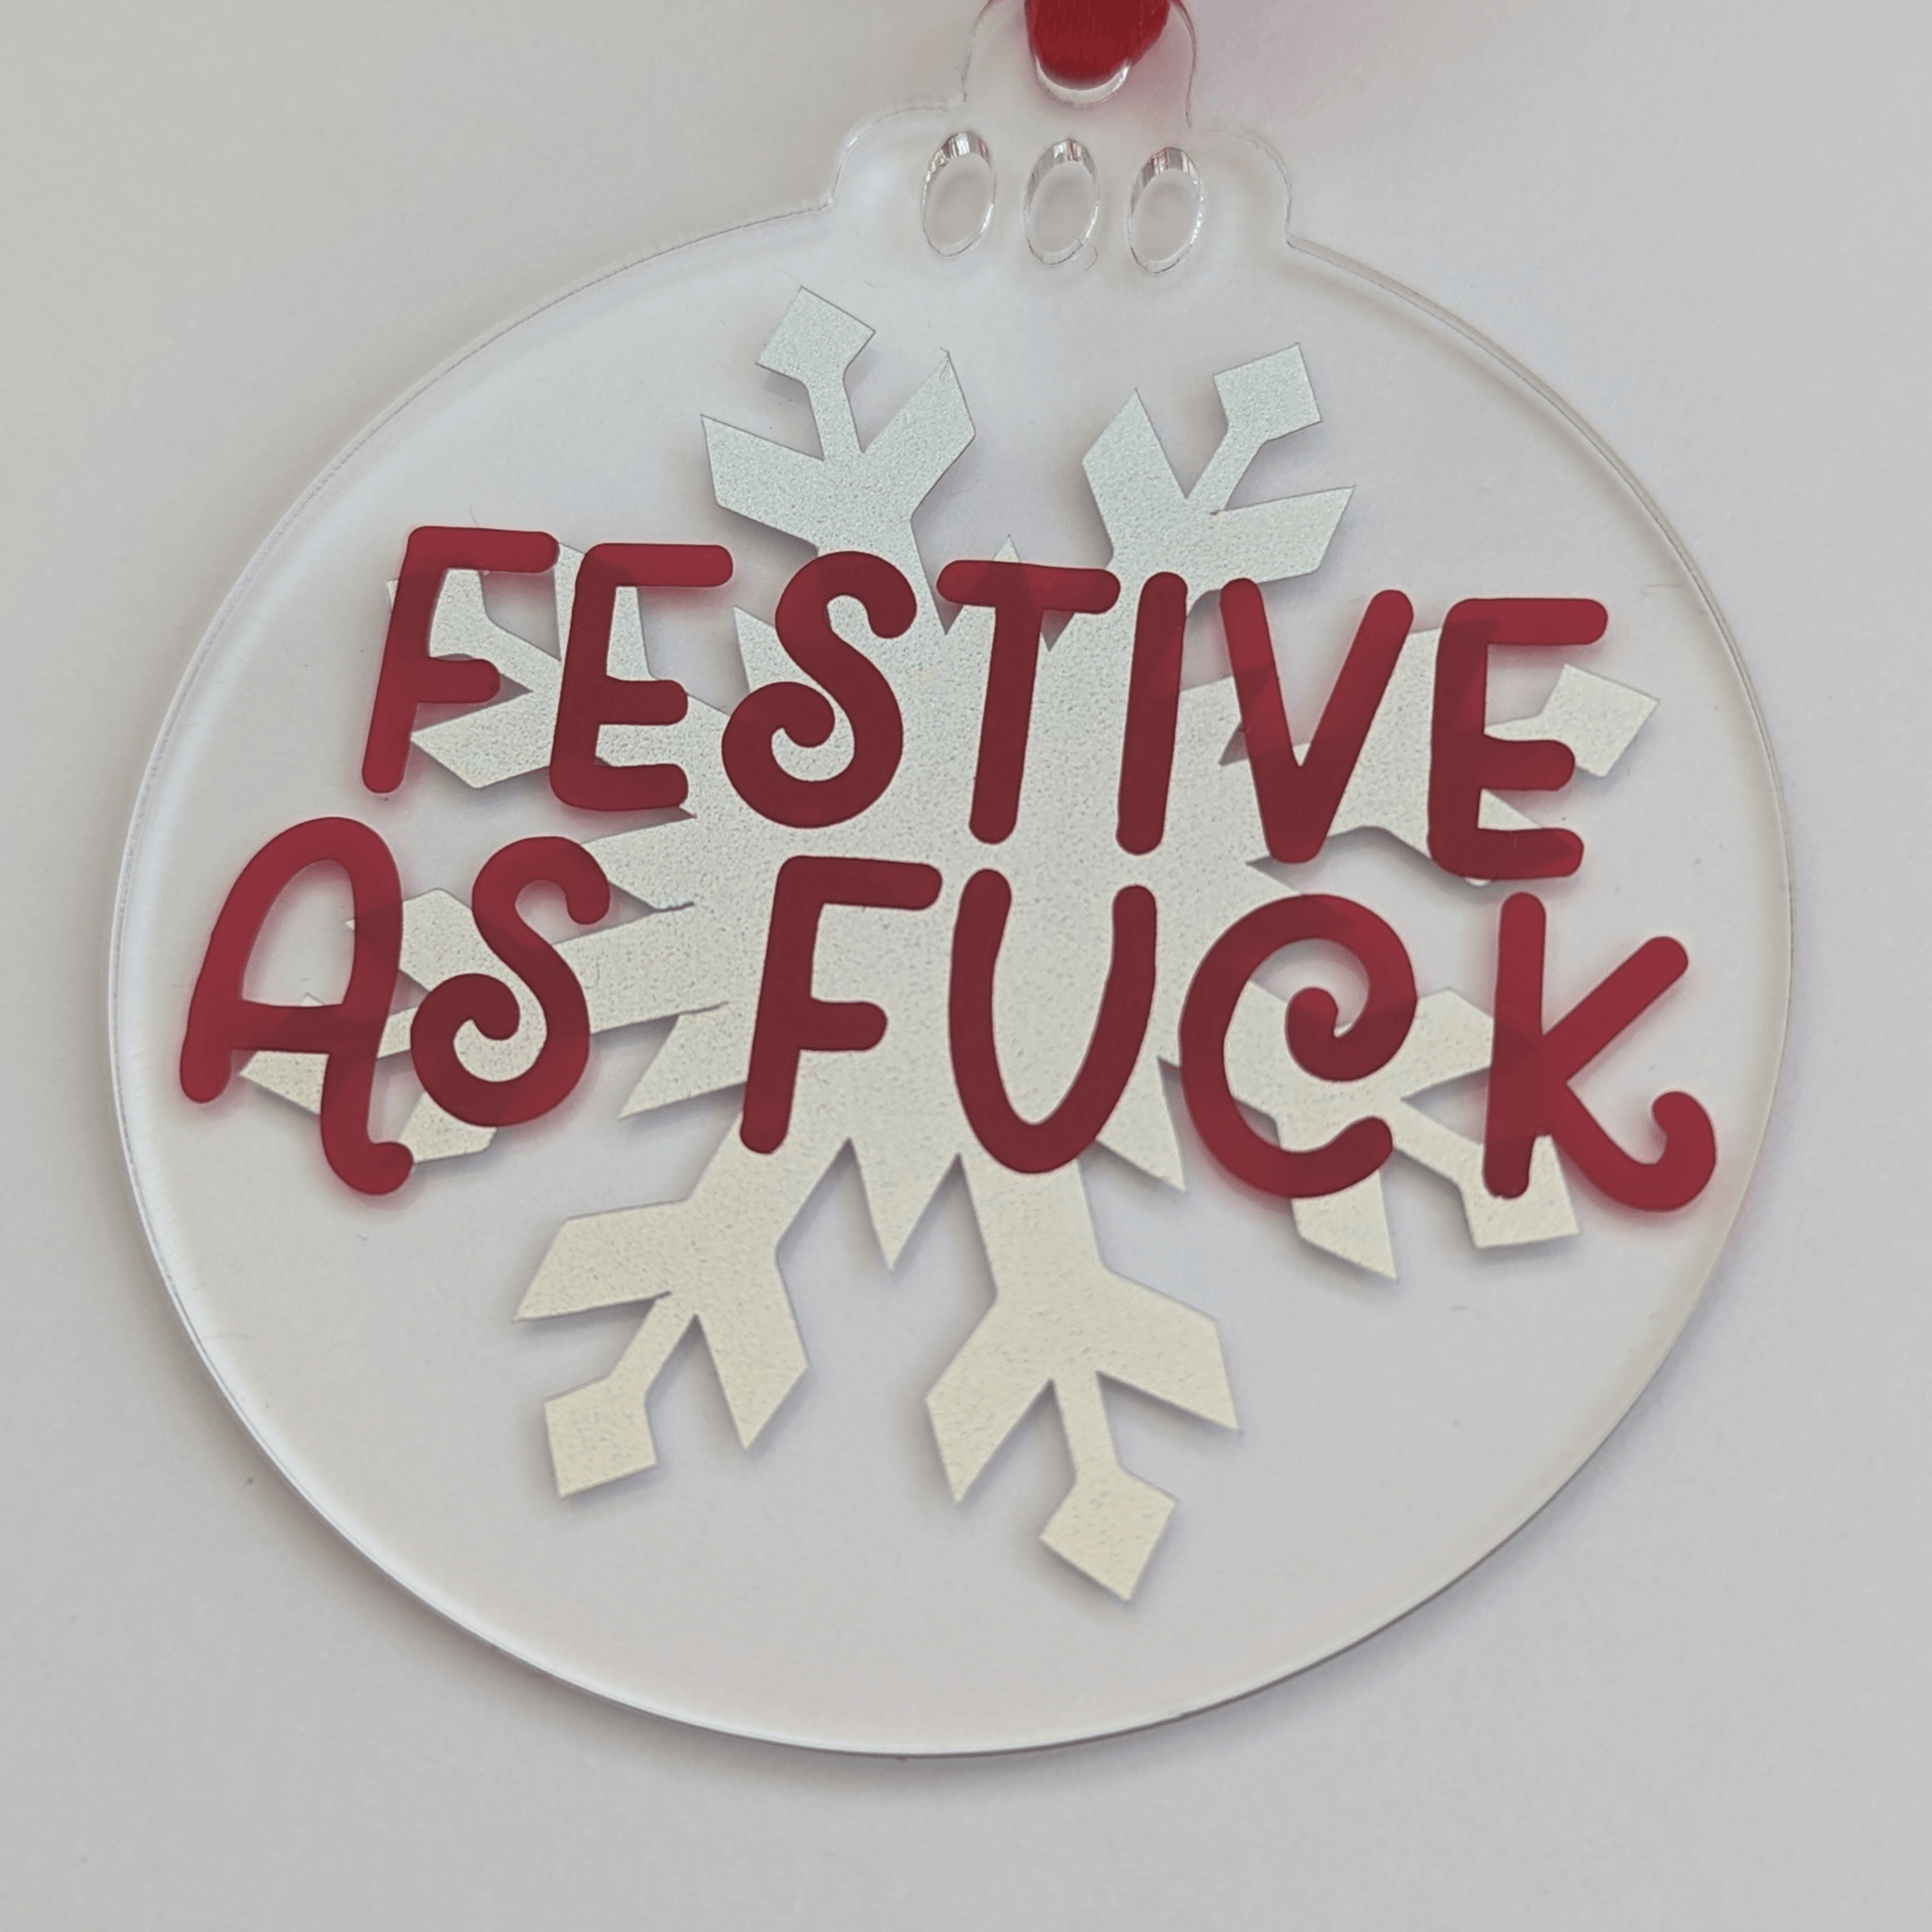 Little Kraken's Festive As Fuck Hanging Decoration, Christmas Decorations for £4.99 each